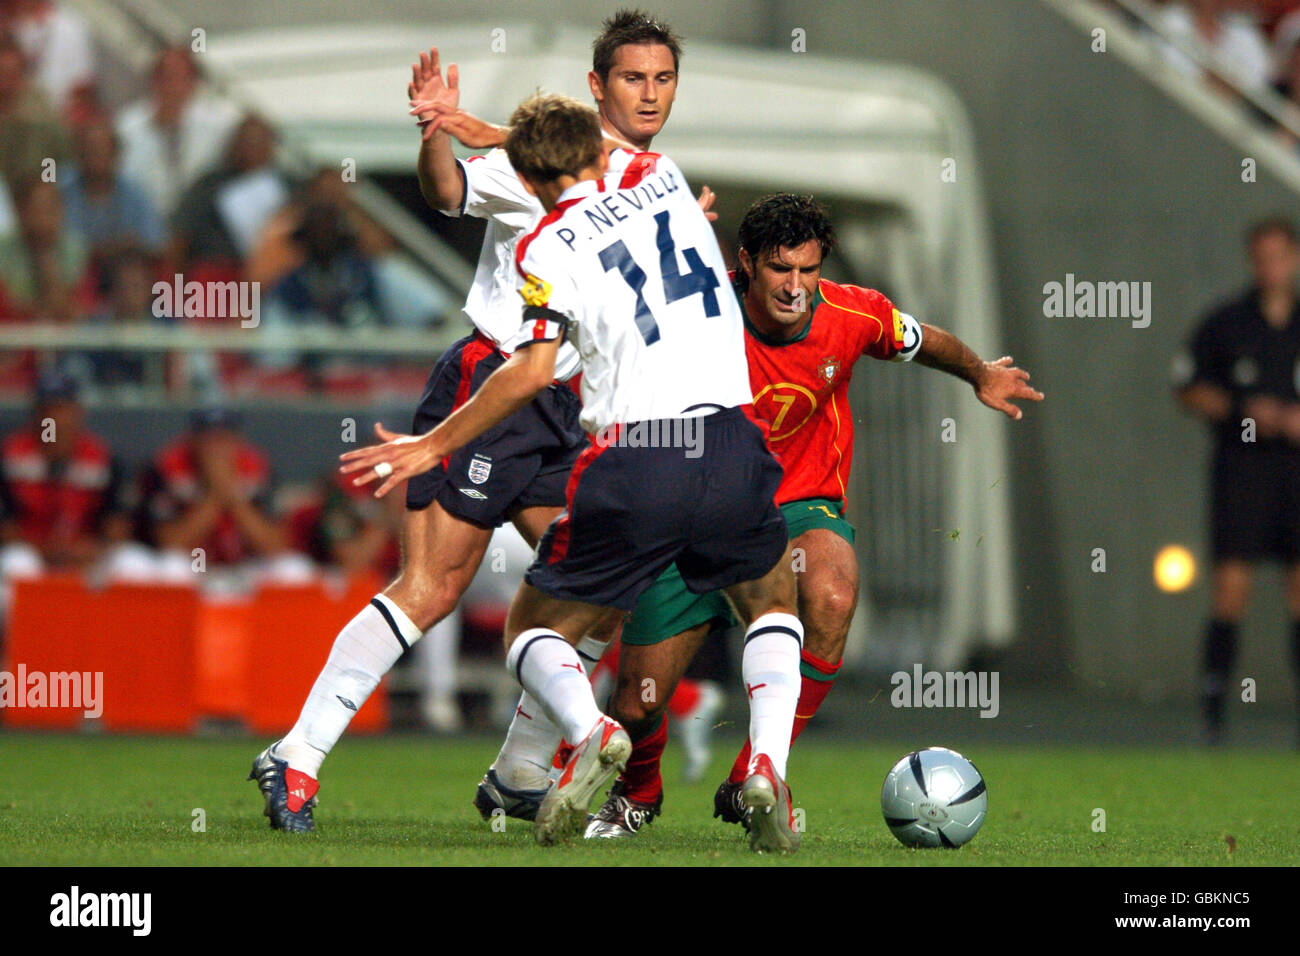 Francisco Mota da Costa of Portugal controls the ball during the